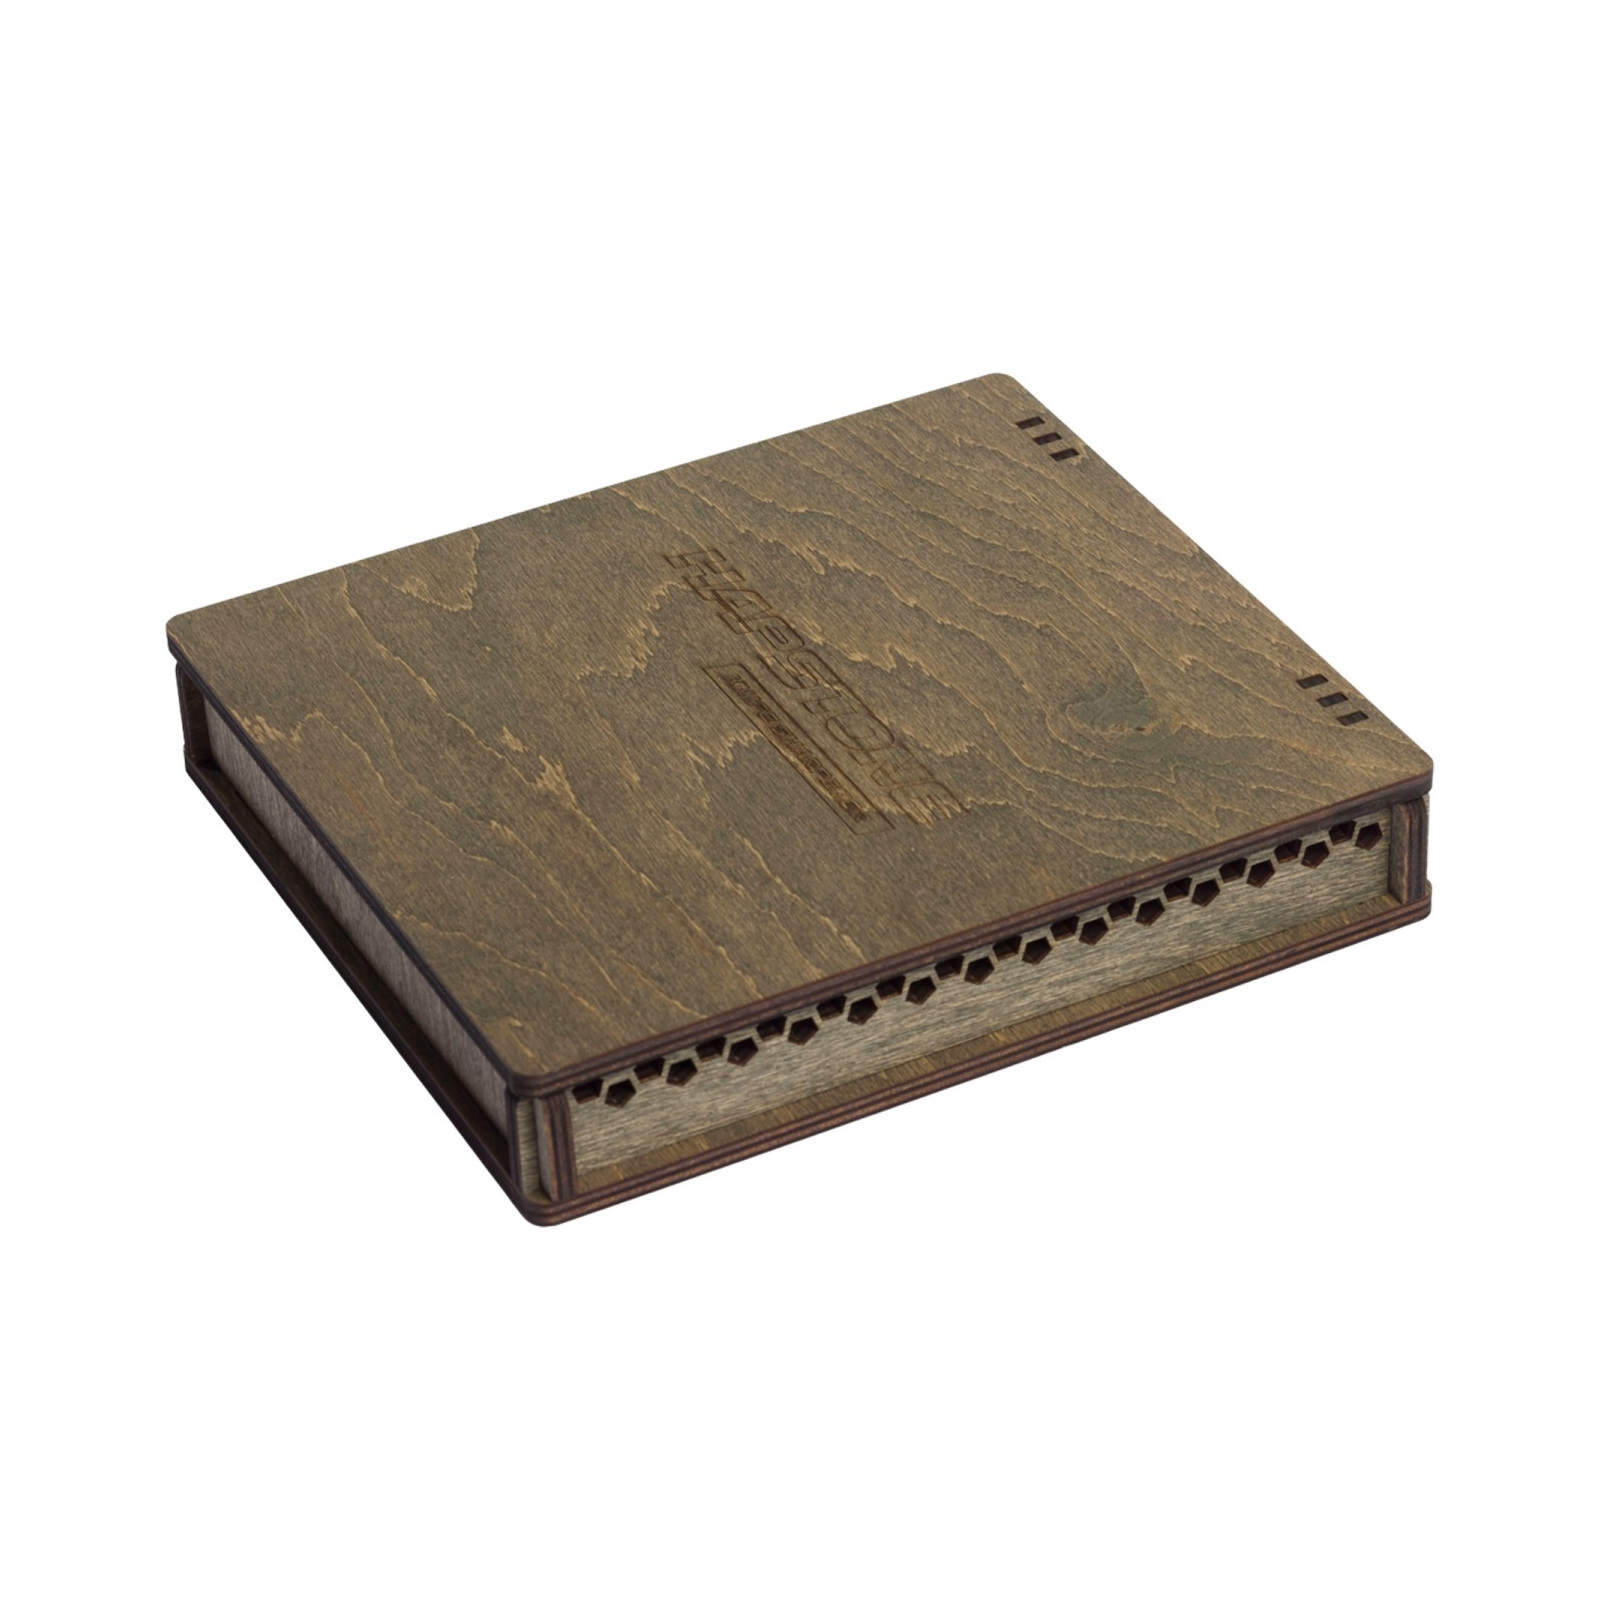 Plywood storage case for stones12-1500x1500.jpg